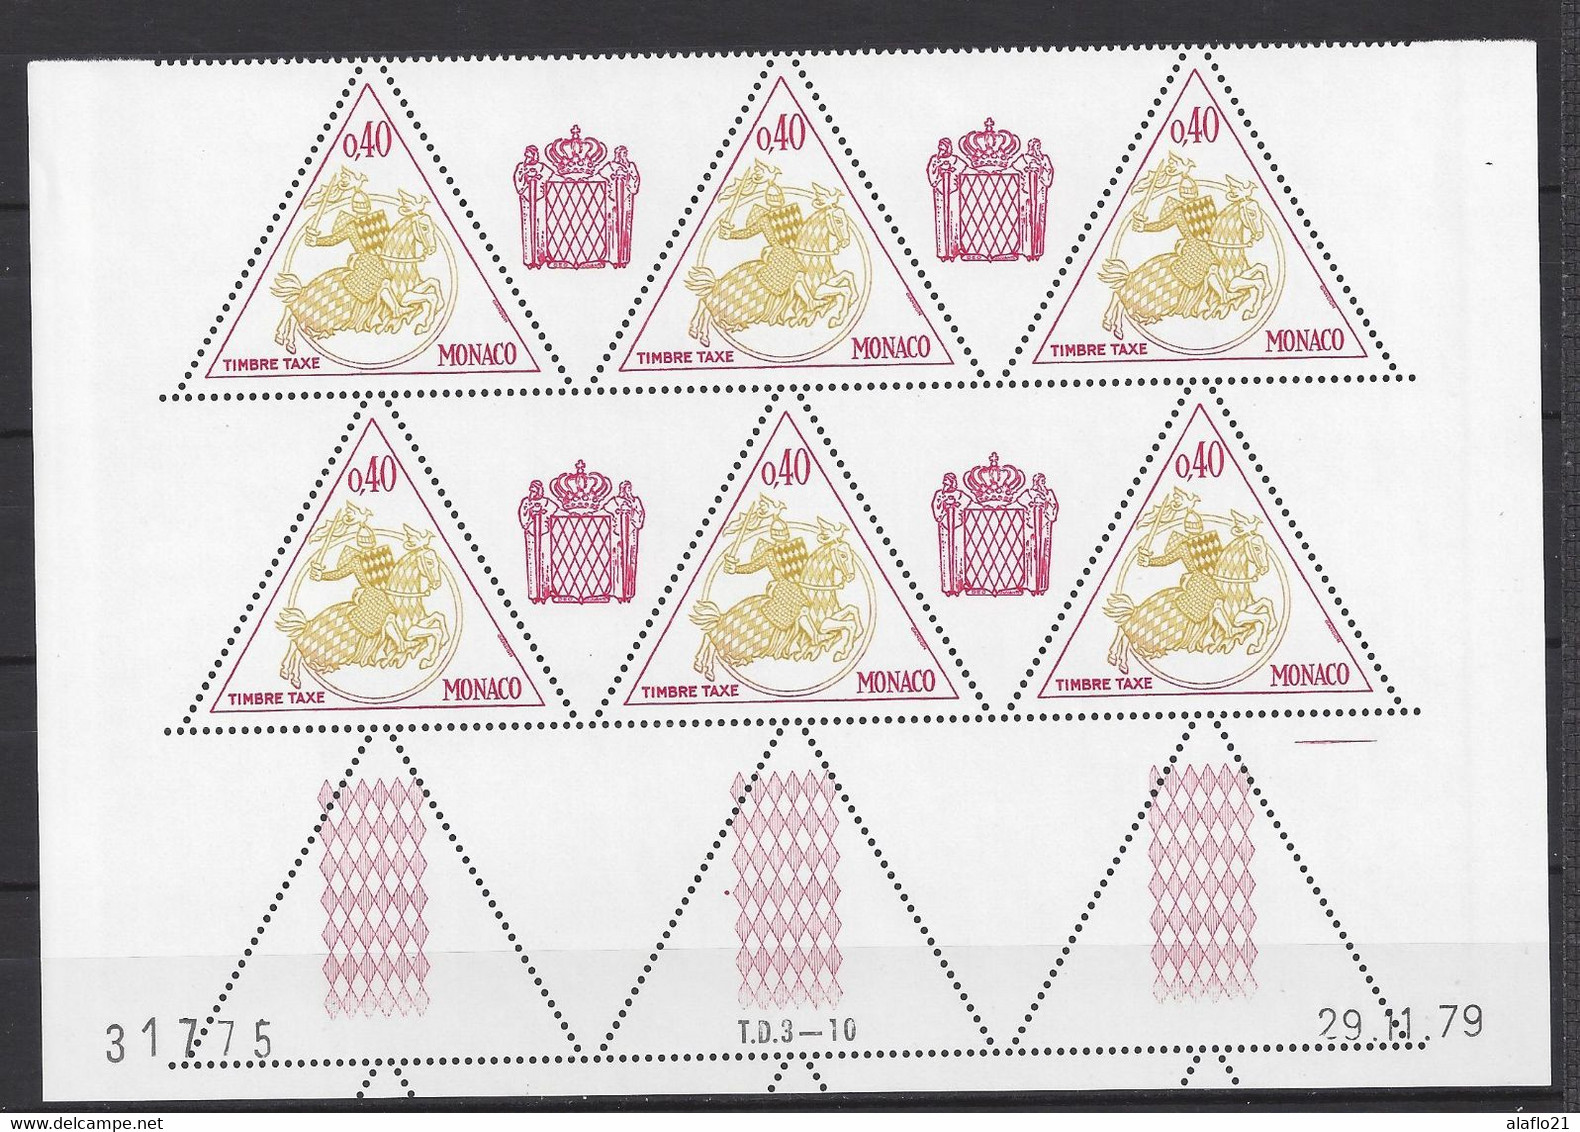 MONACO - TAXE N° 68 - SCEAU PRINCIER - Bloc De 6 COIN DATE - NEUF SANS CHARNIERE - 29/11/79 - Taxe